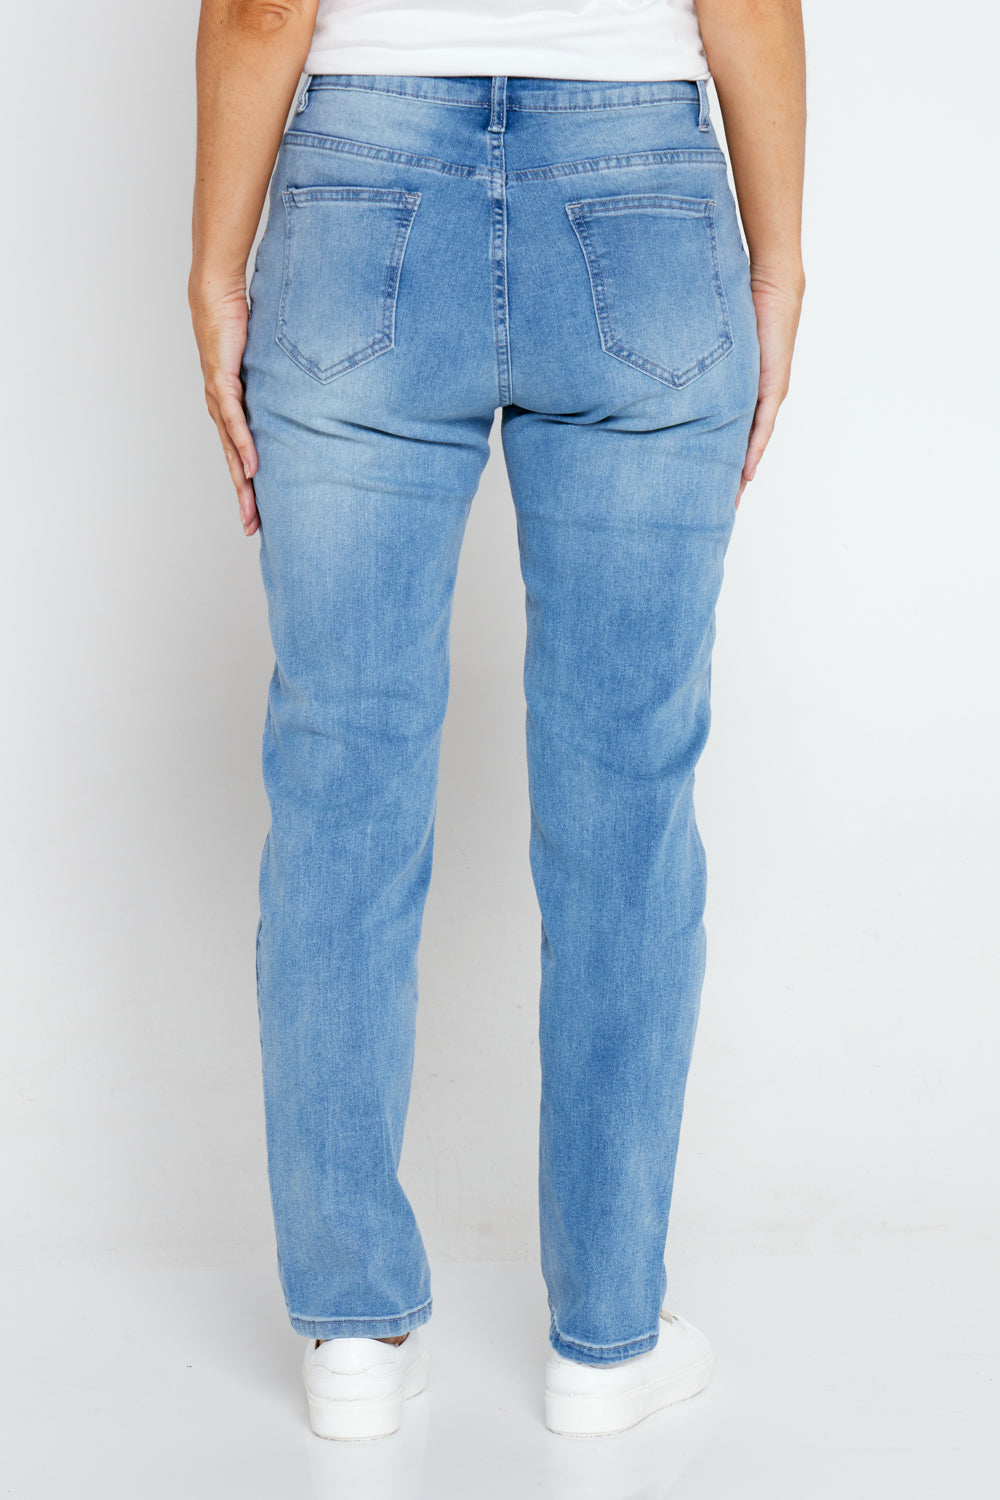 Savannah Cotton Jeans - Denim – TULIO Fashion